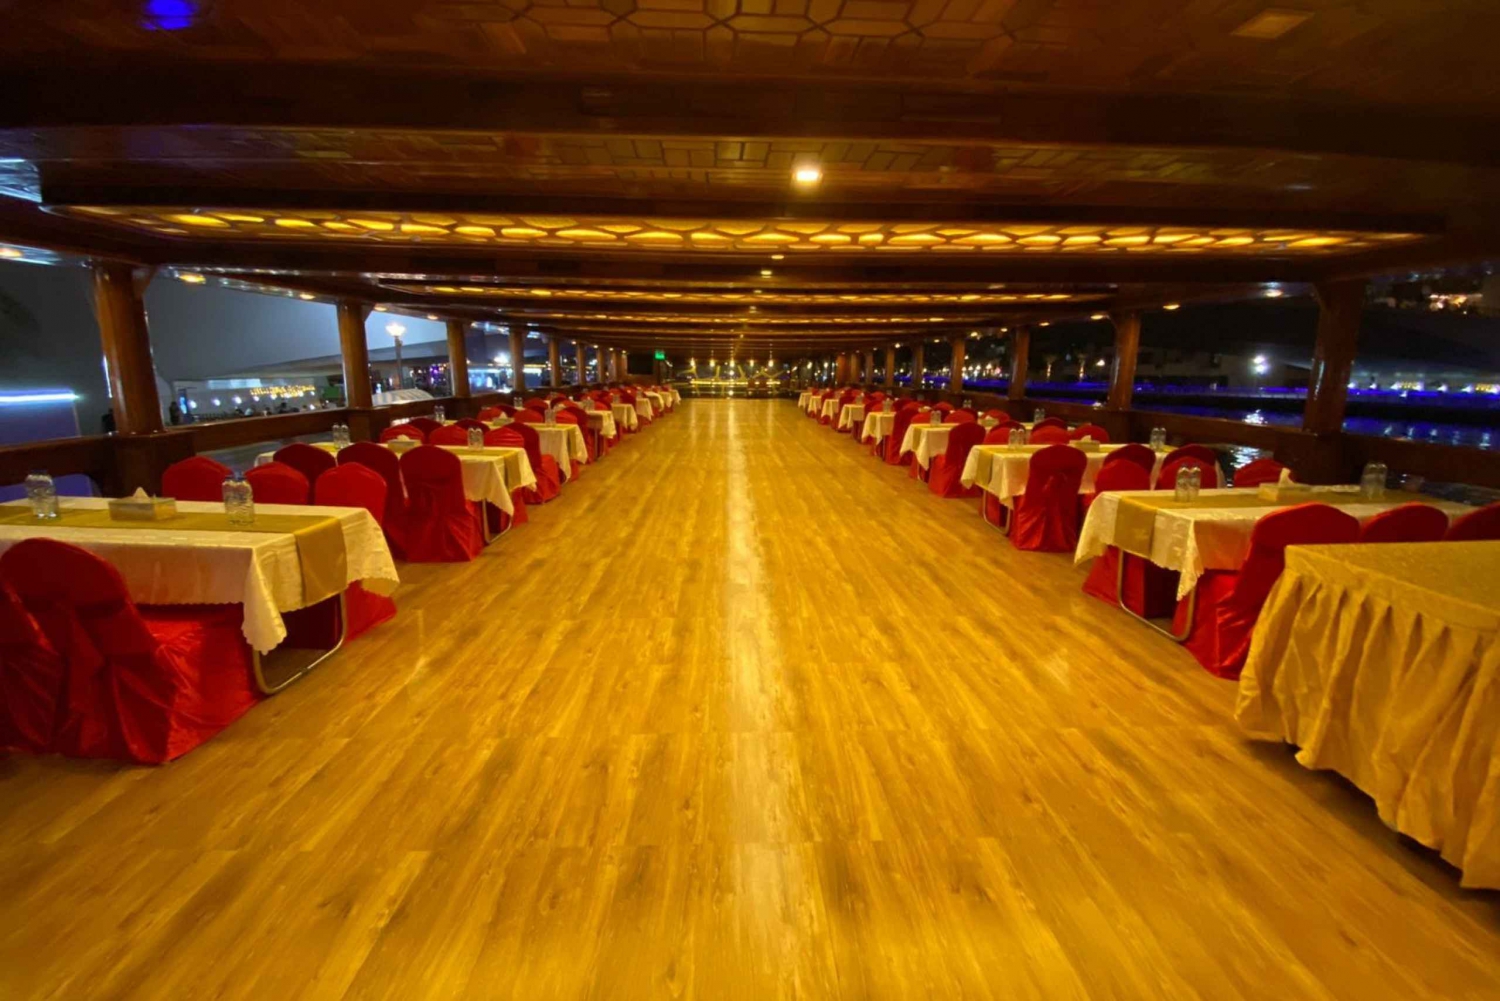 Dubai Marina: Dinner Cruise in a Traditional Boat